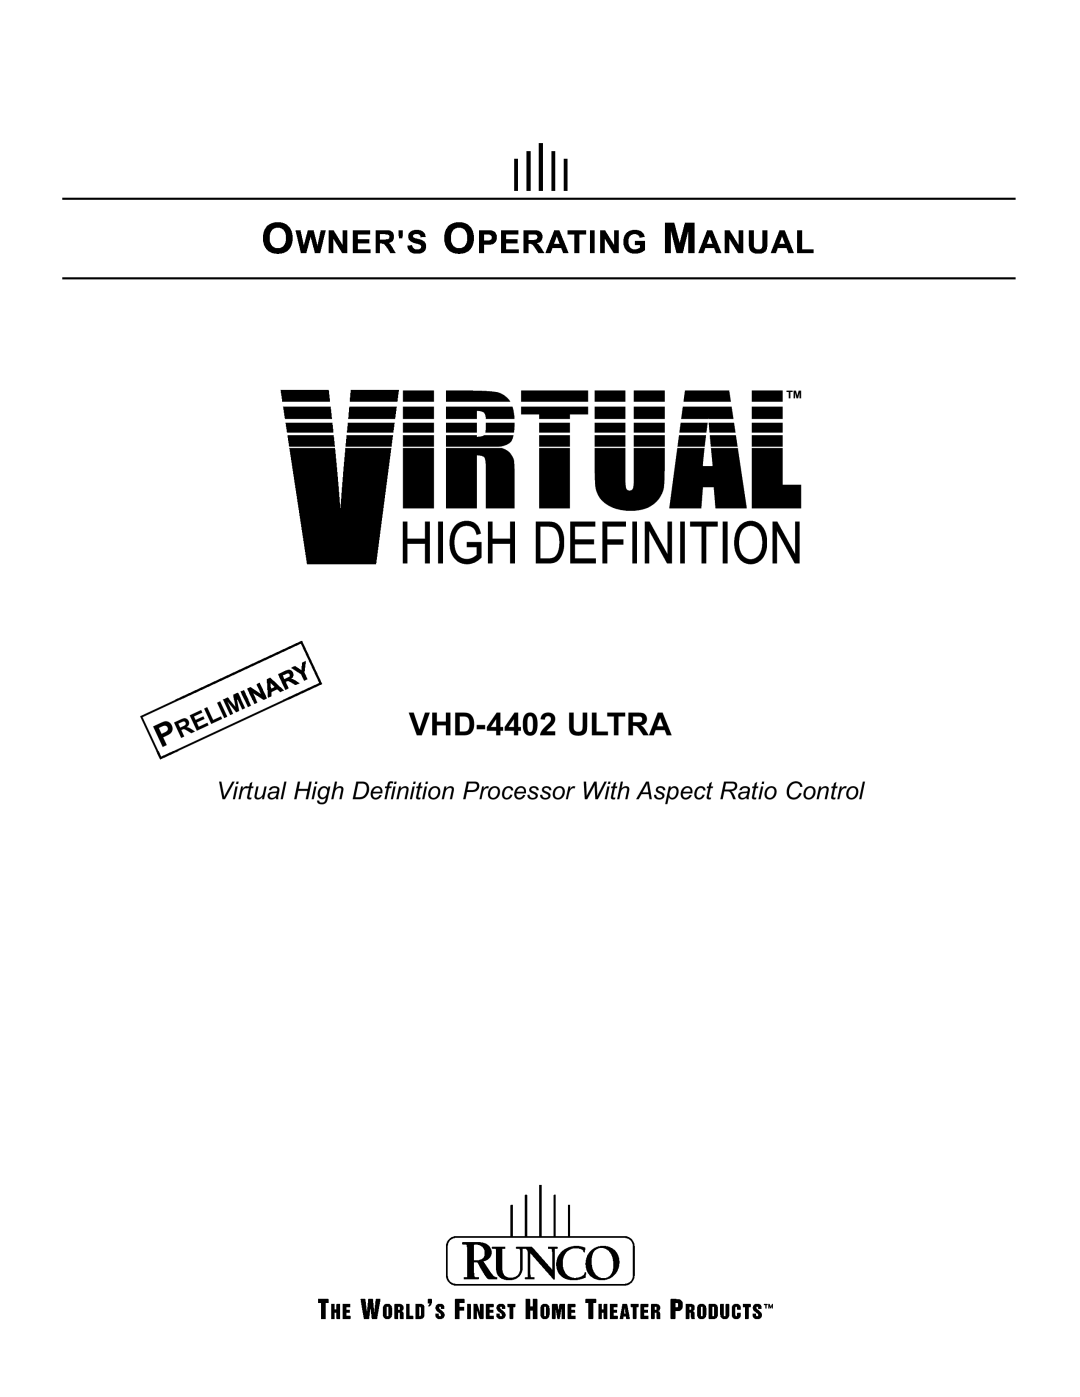 Runco virtual high definition processor with aspect ratio control manual VHD-4402 ULTRA, Y Preliminar 